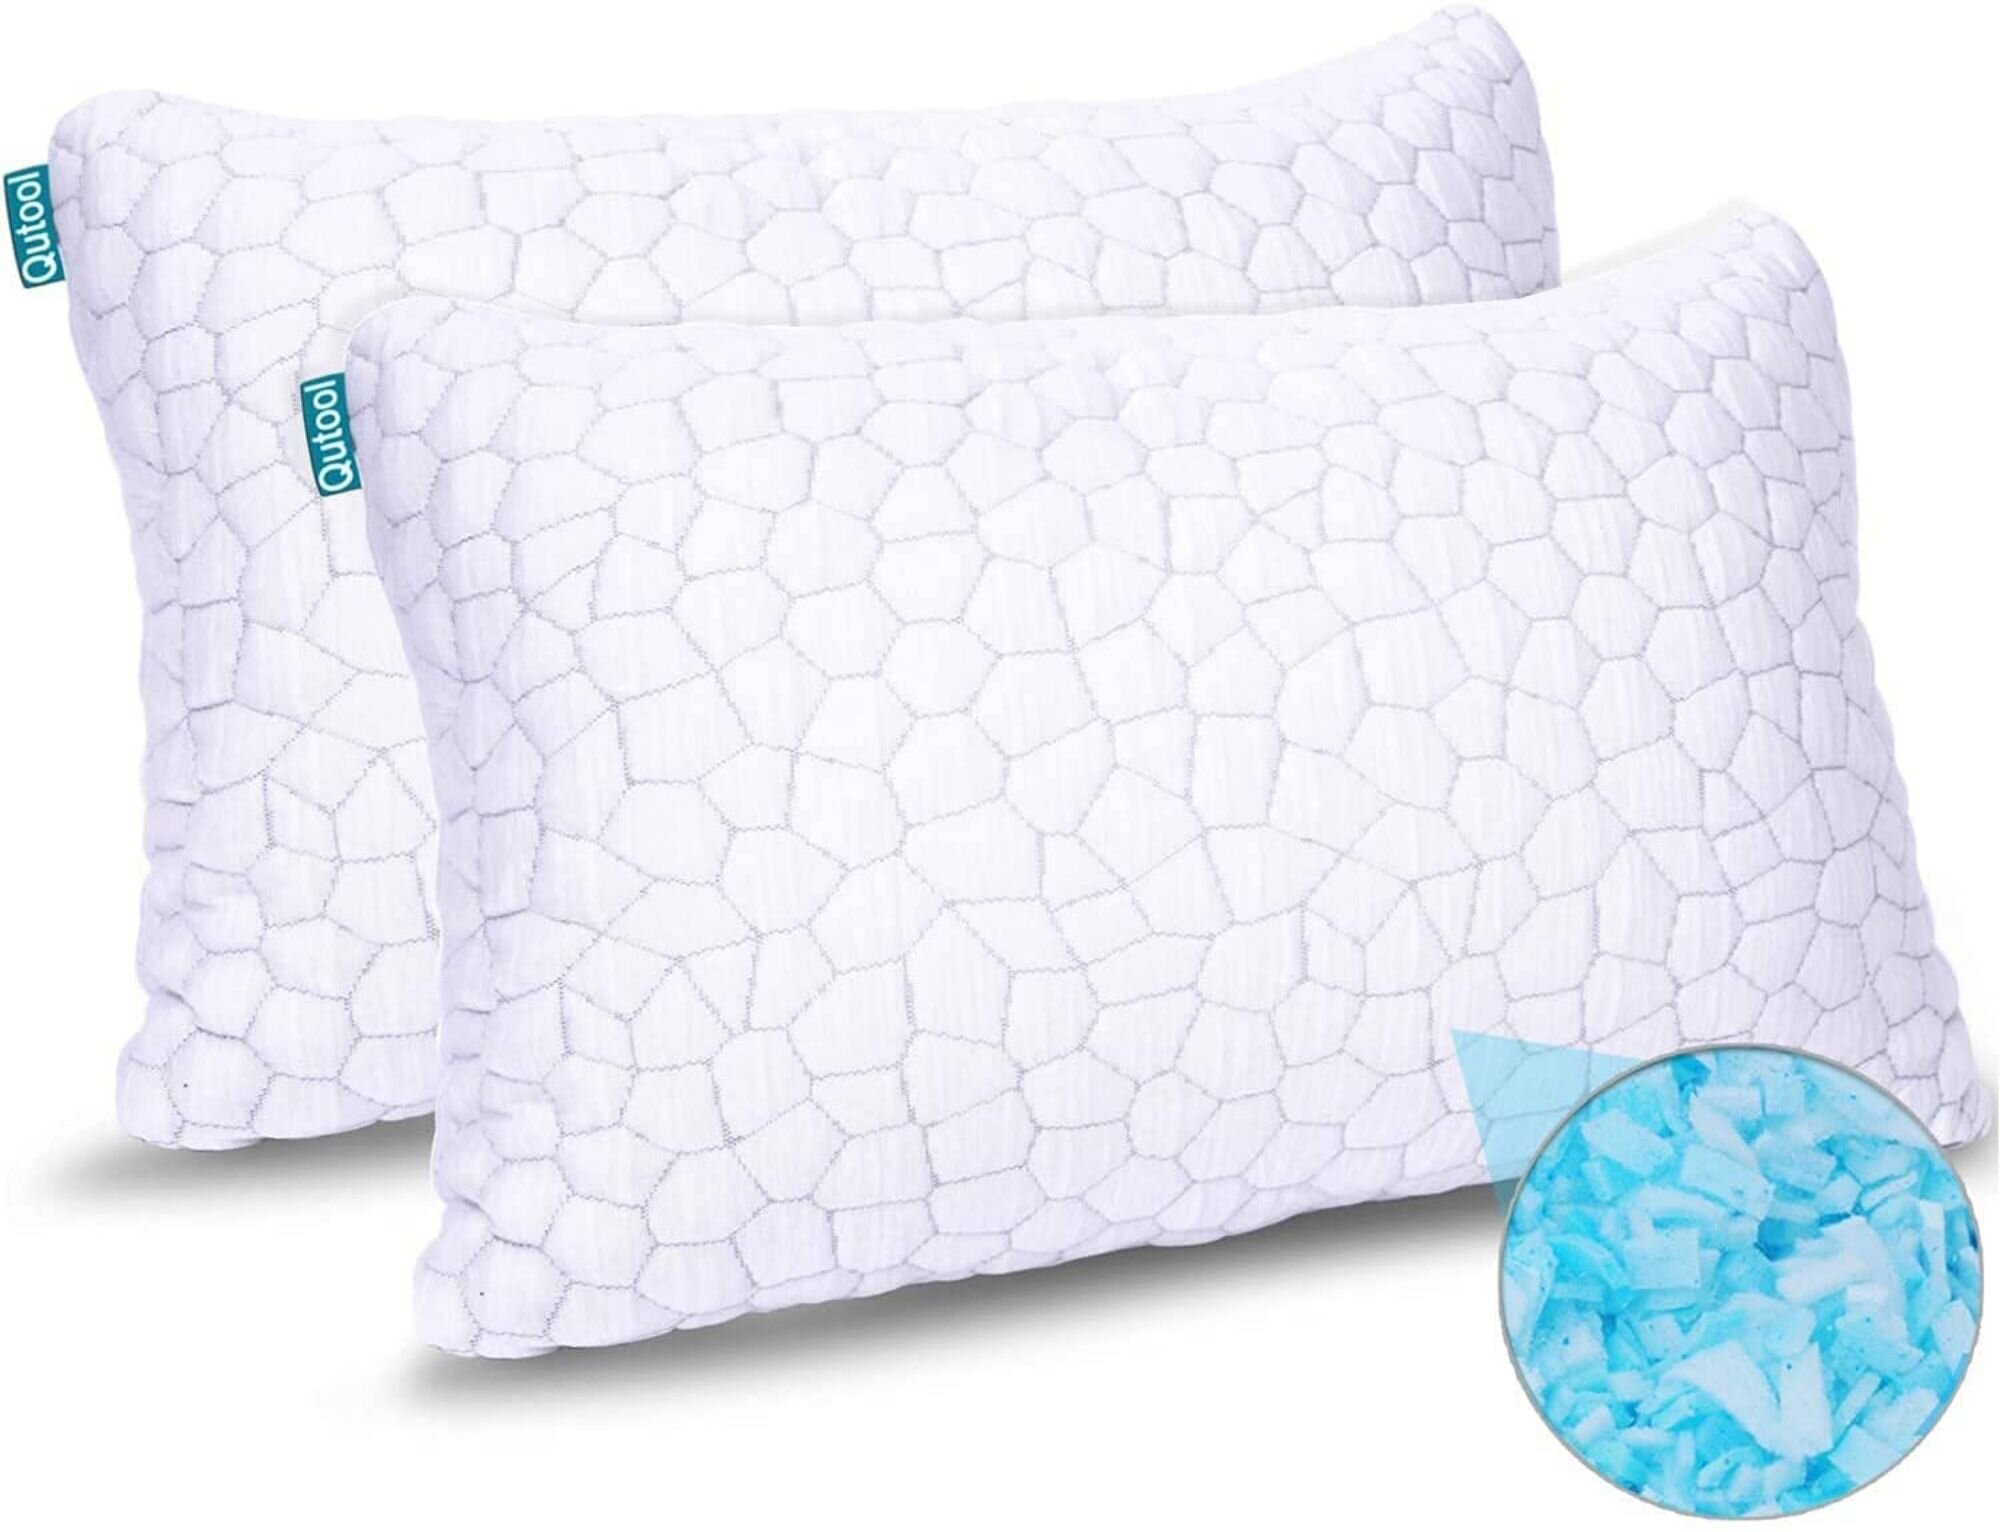 2 Super Firm Pillows Pillow Standard Size Extra Firm Bed Neck Head Support 2pack 